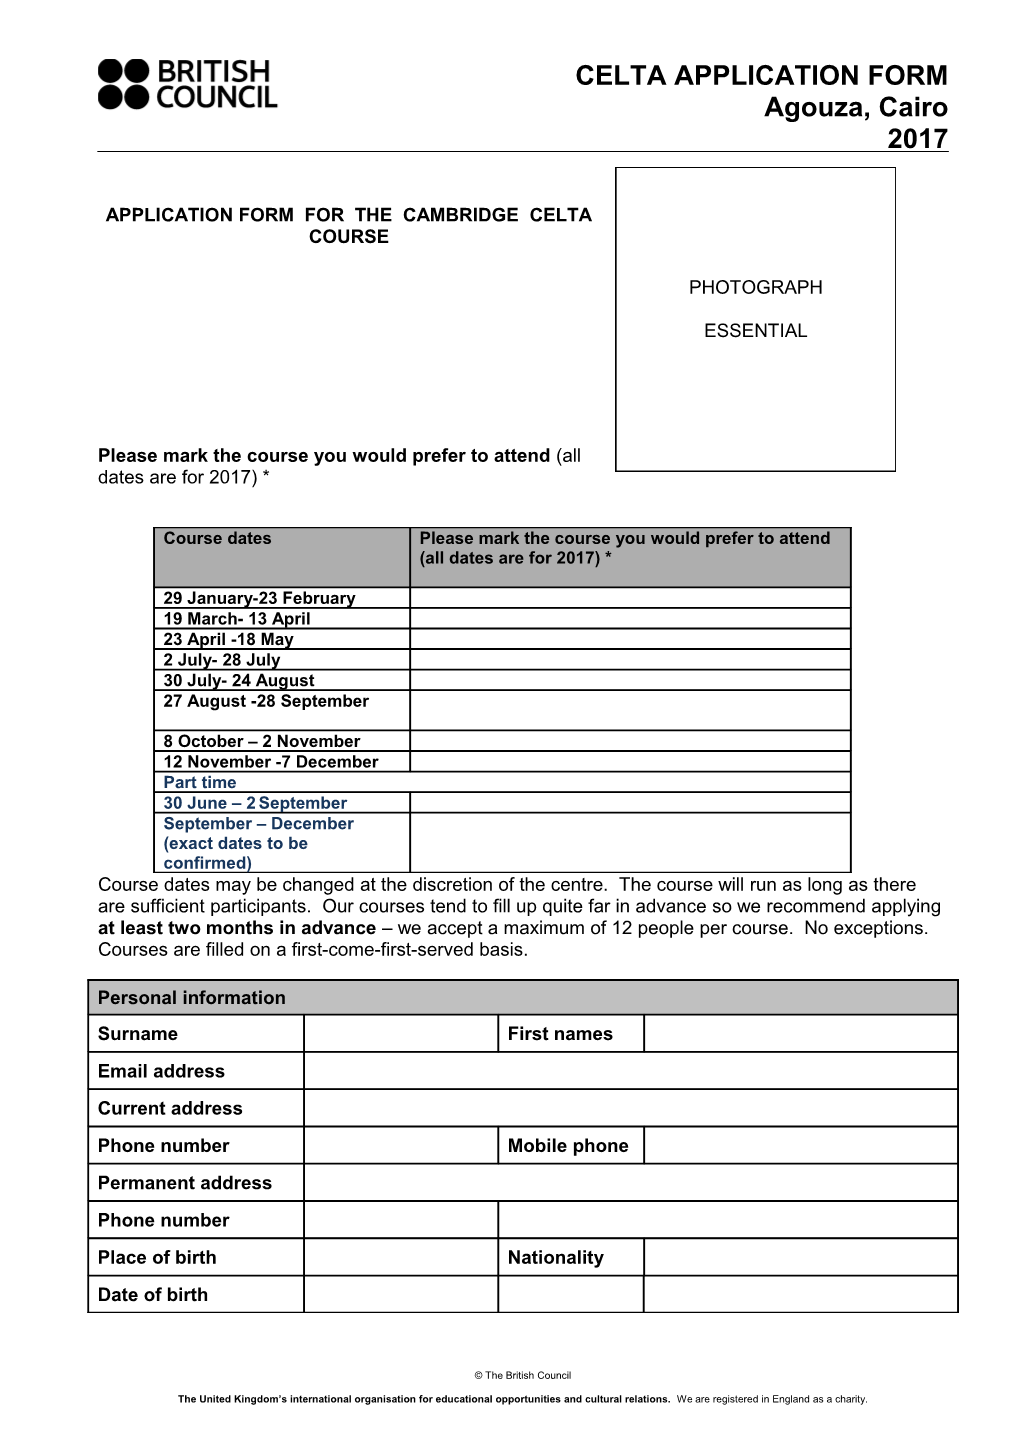 Application Form for the Cambridge Celta Course